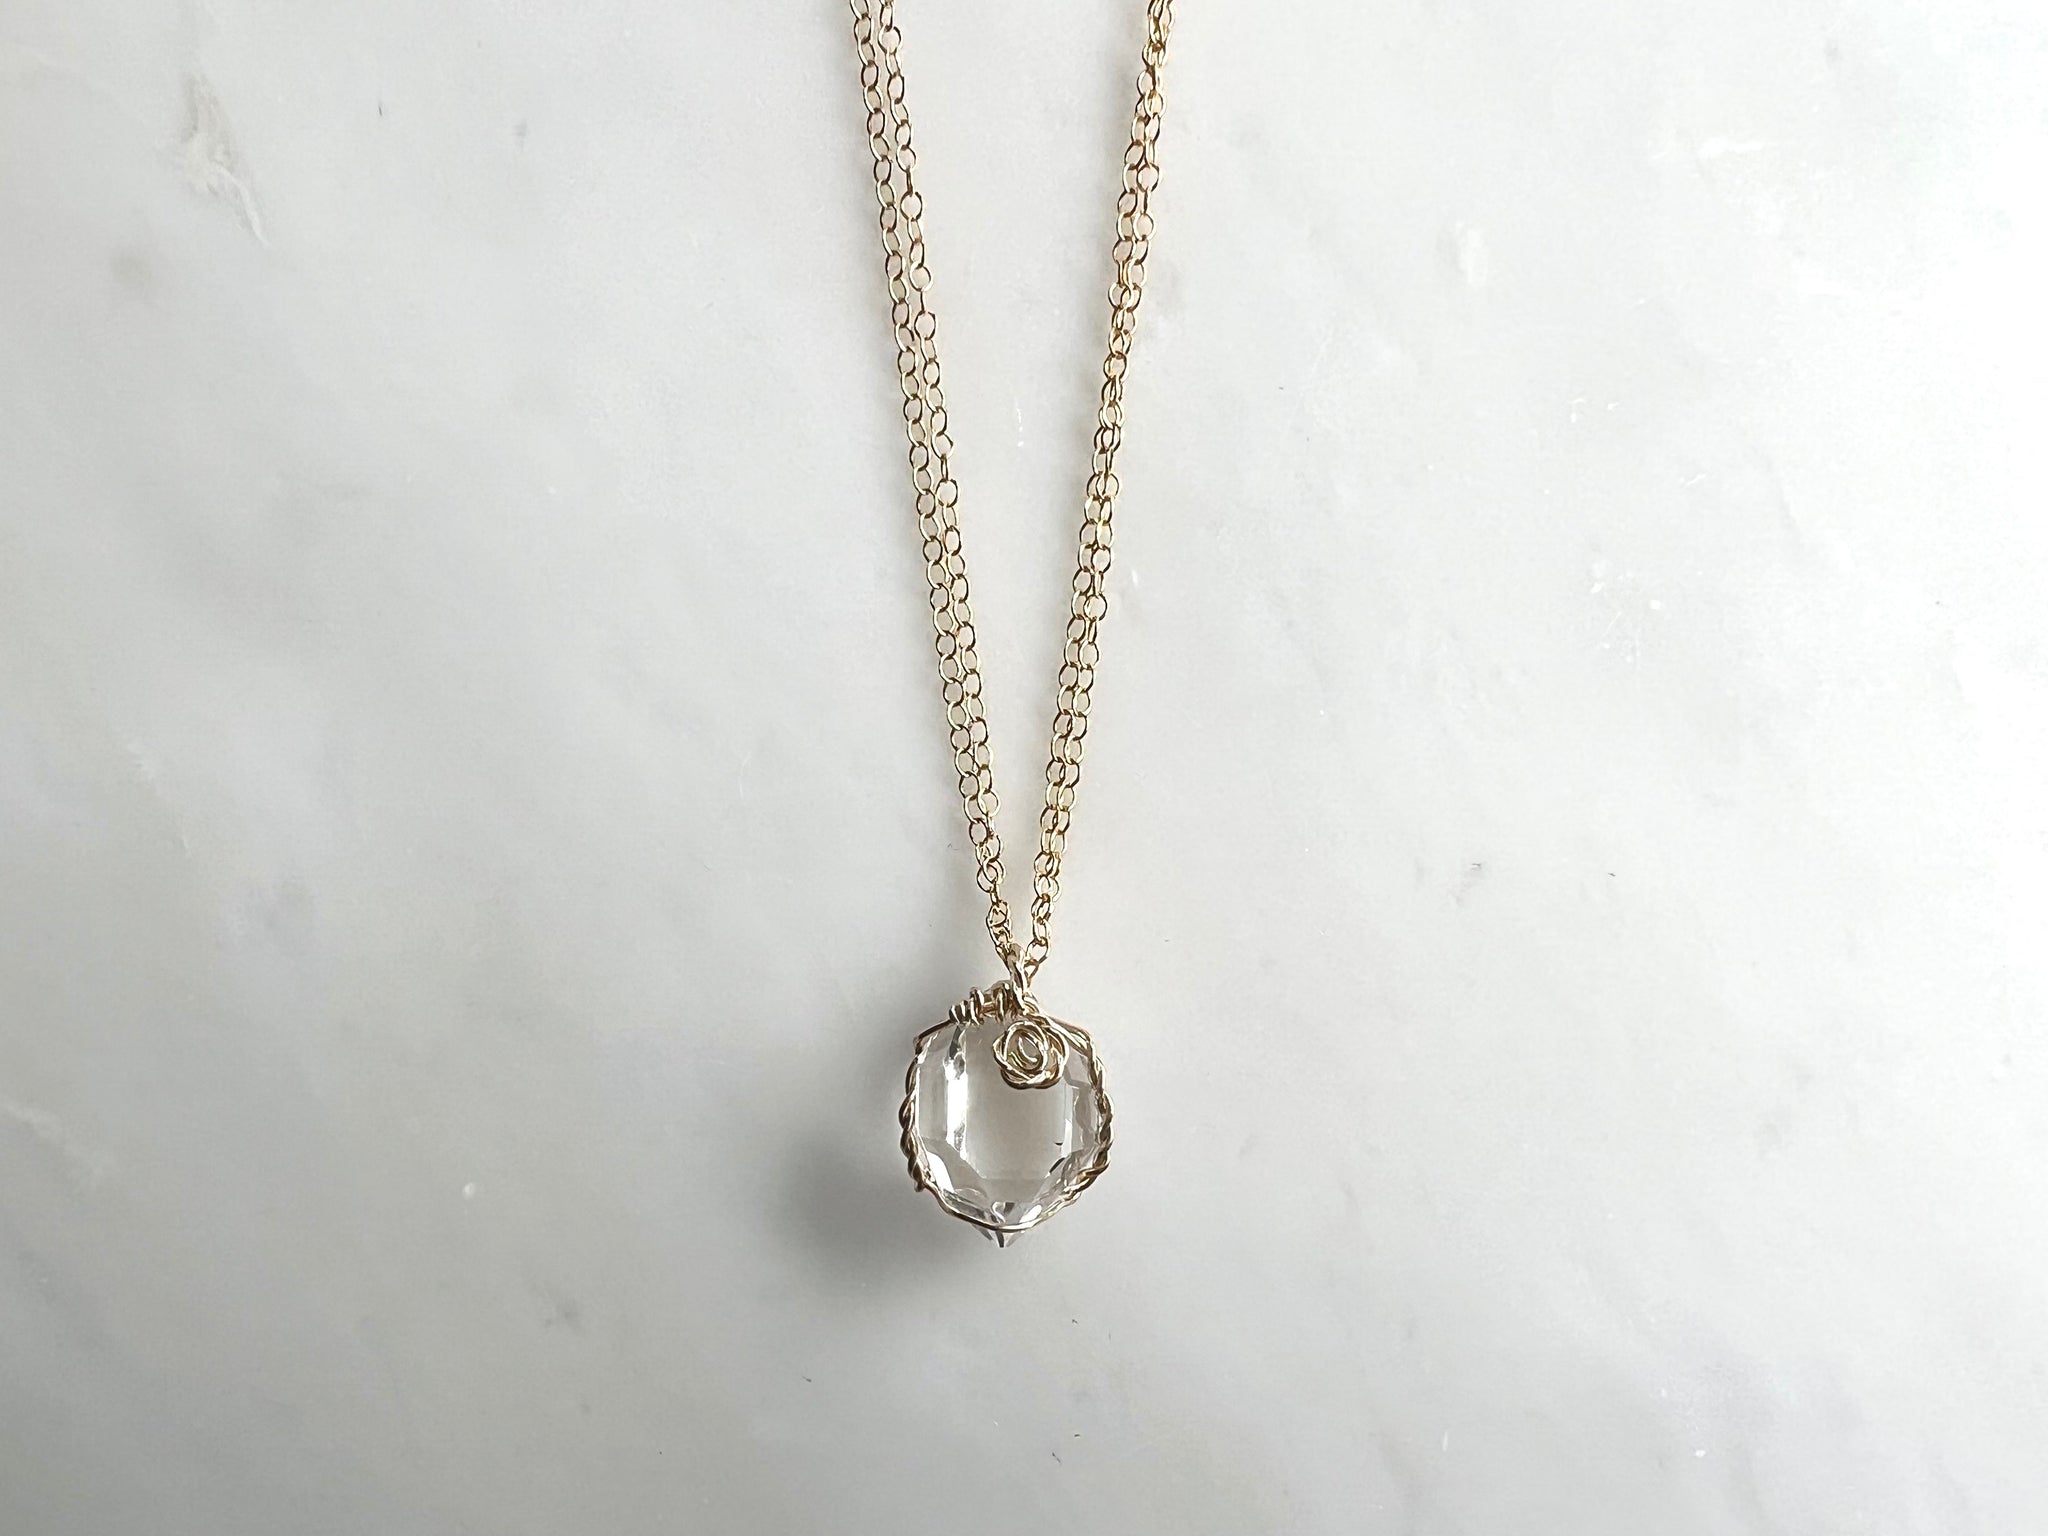 #1 Herkimer Diamond 5/8" Necklace 14K Gold Filled / ハーキマーダイアモンド 5/8" ネックレス 14K ゴールドフィルド